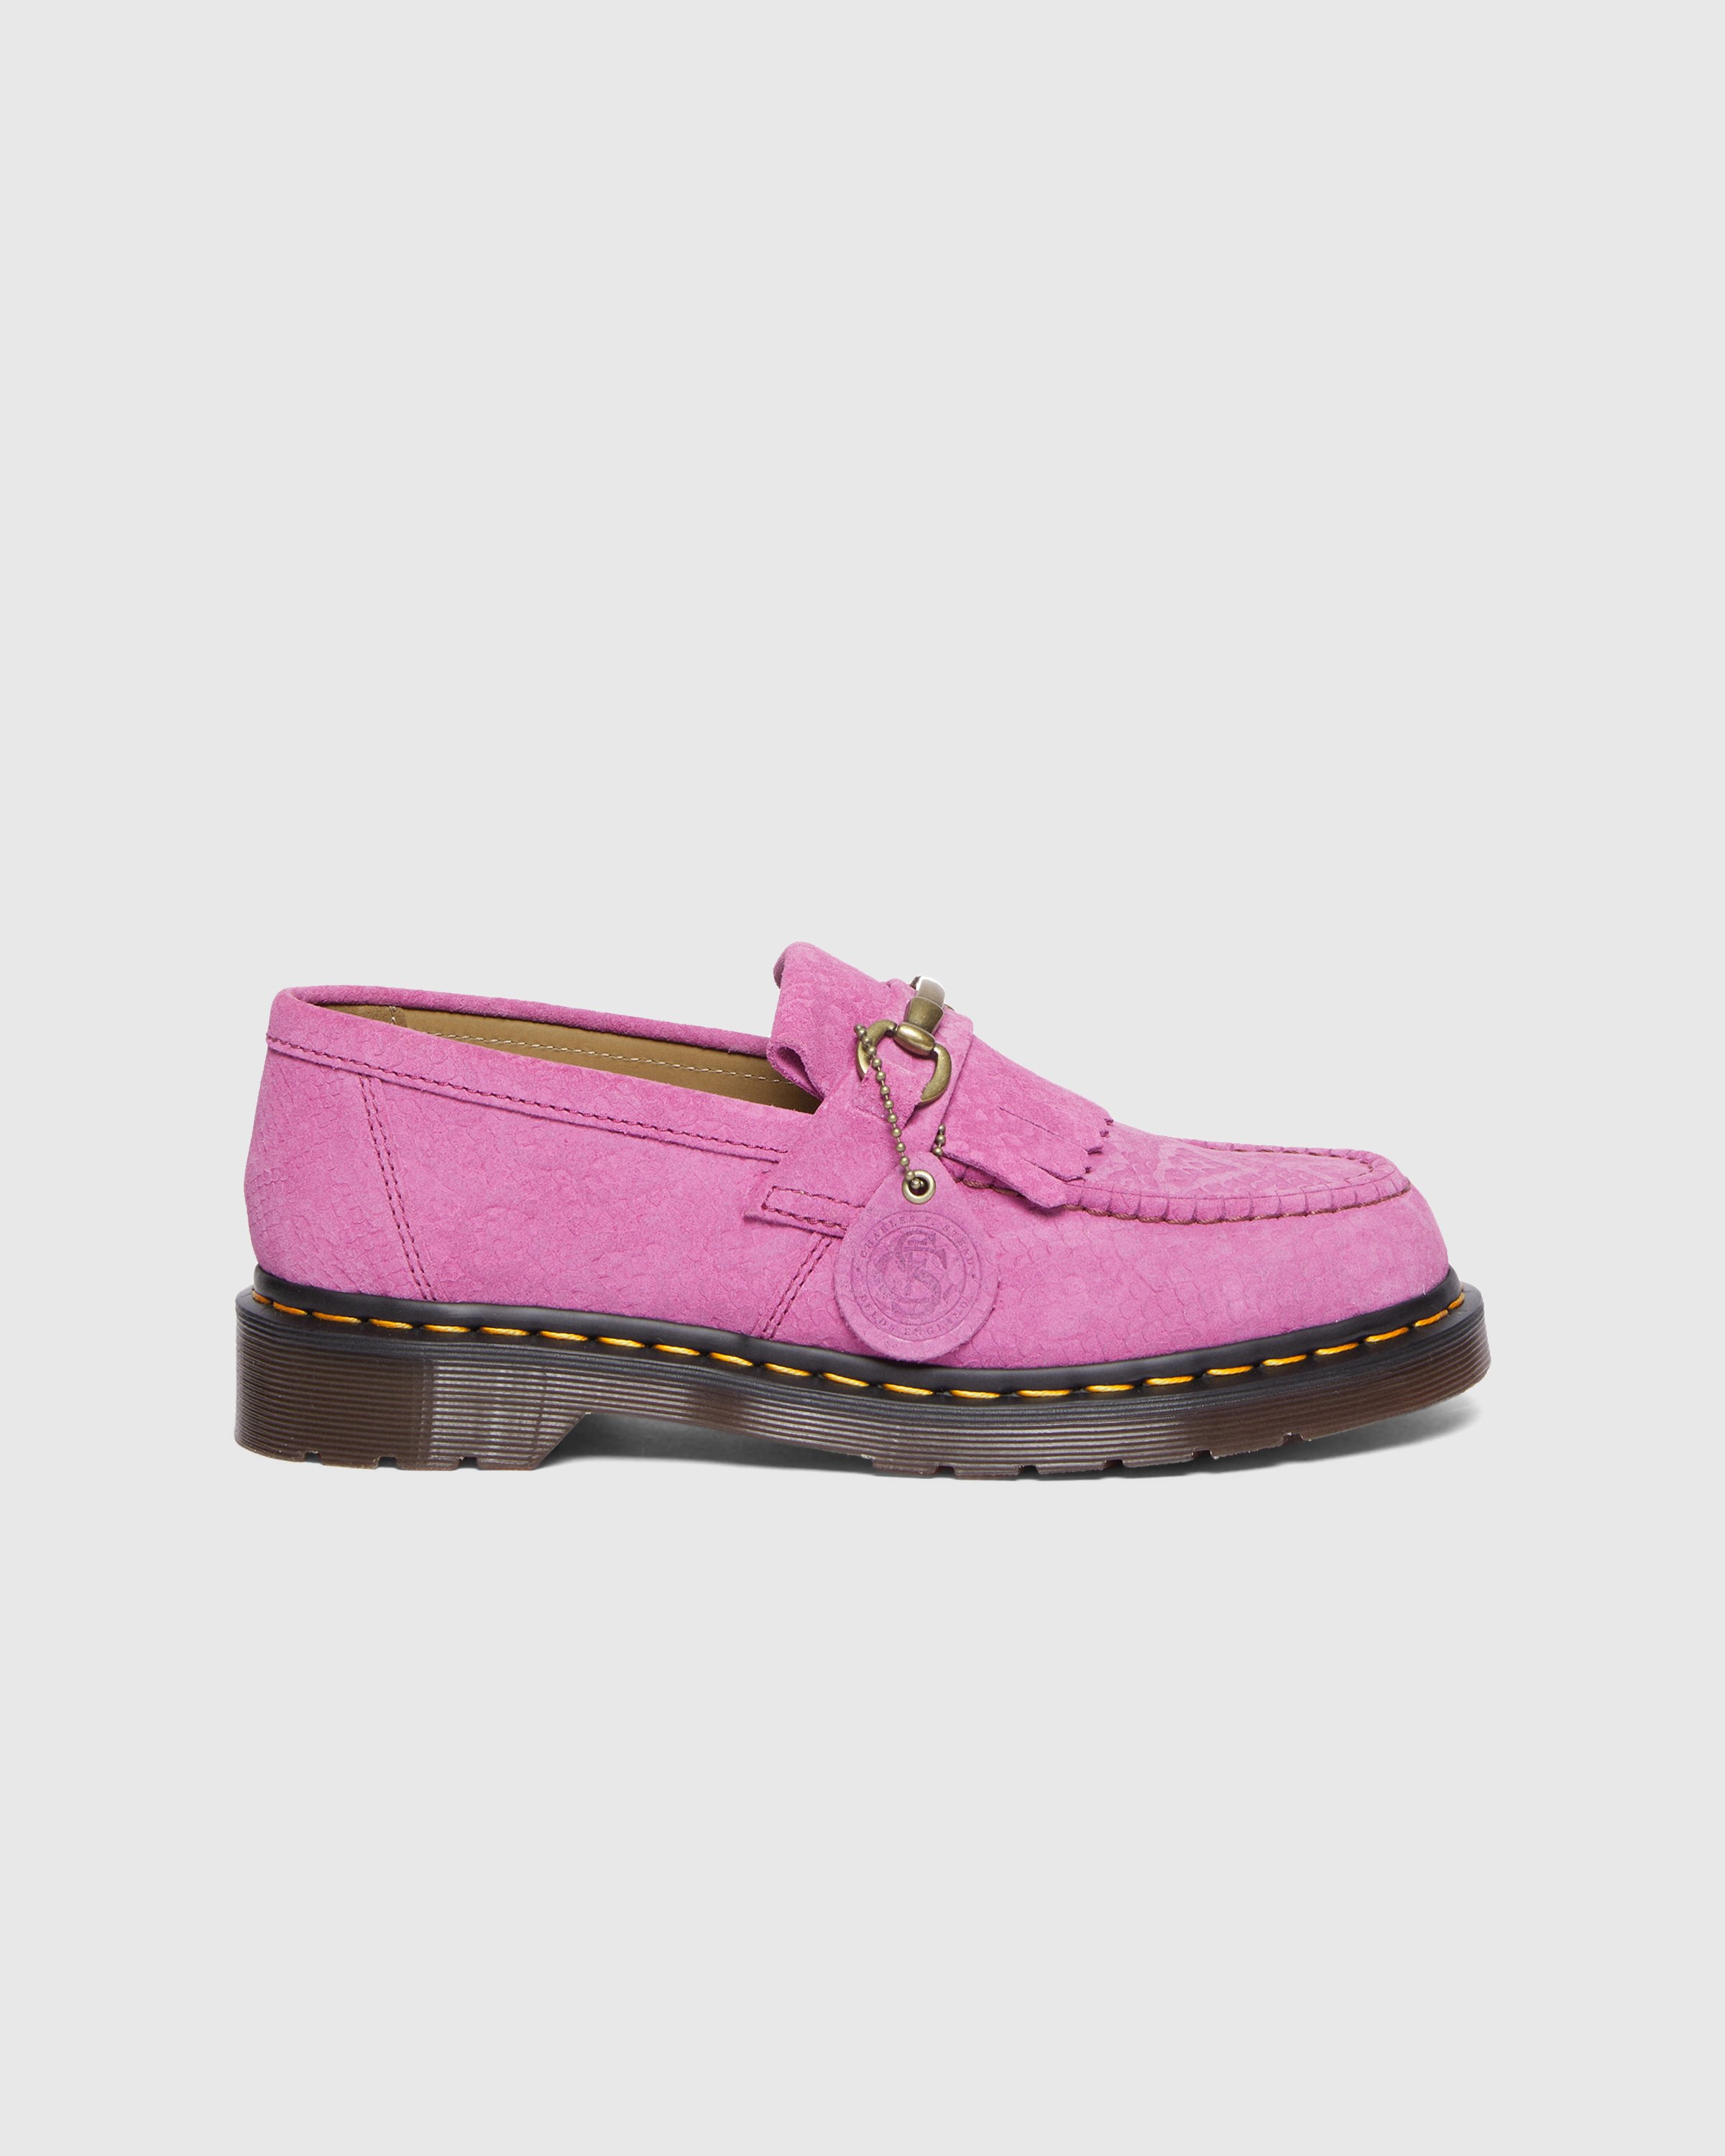 Dr. Martens - Adrian Snaffle Thrift Pink/Python Emboss - Footwear - Pink - Image 1